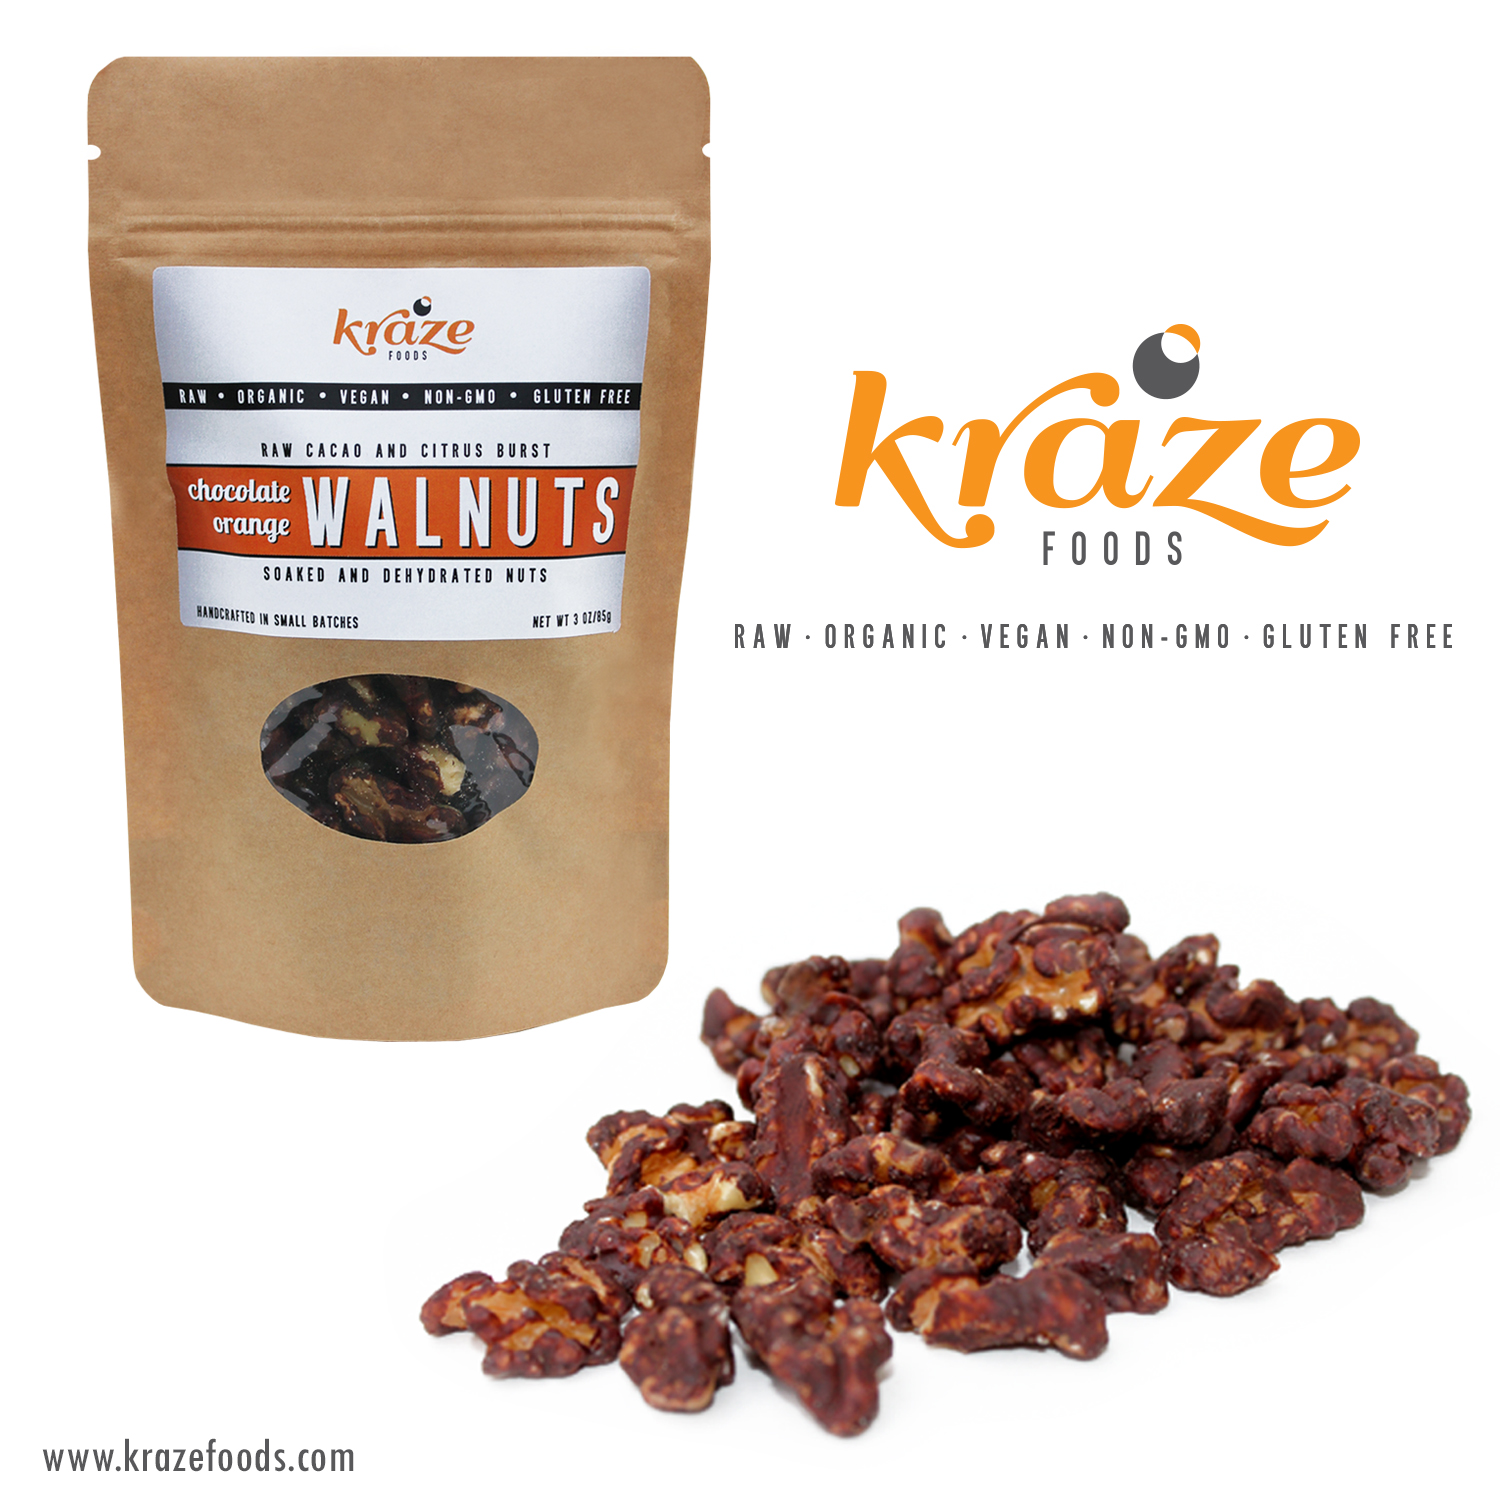 Kraze Foods Chocolate Orange Walnuts are bursting with citrus flavor!